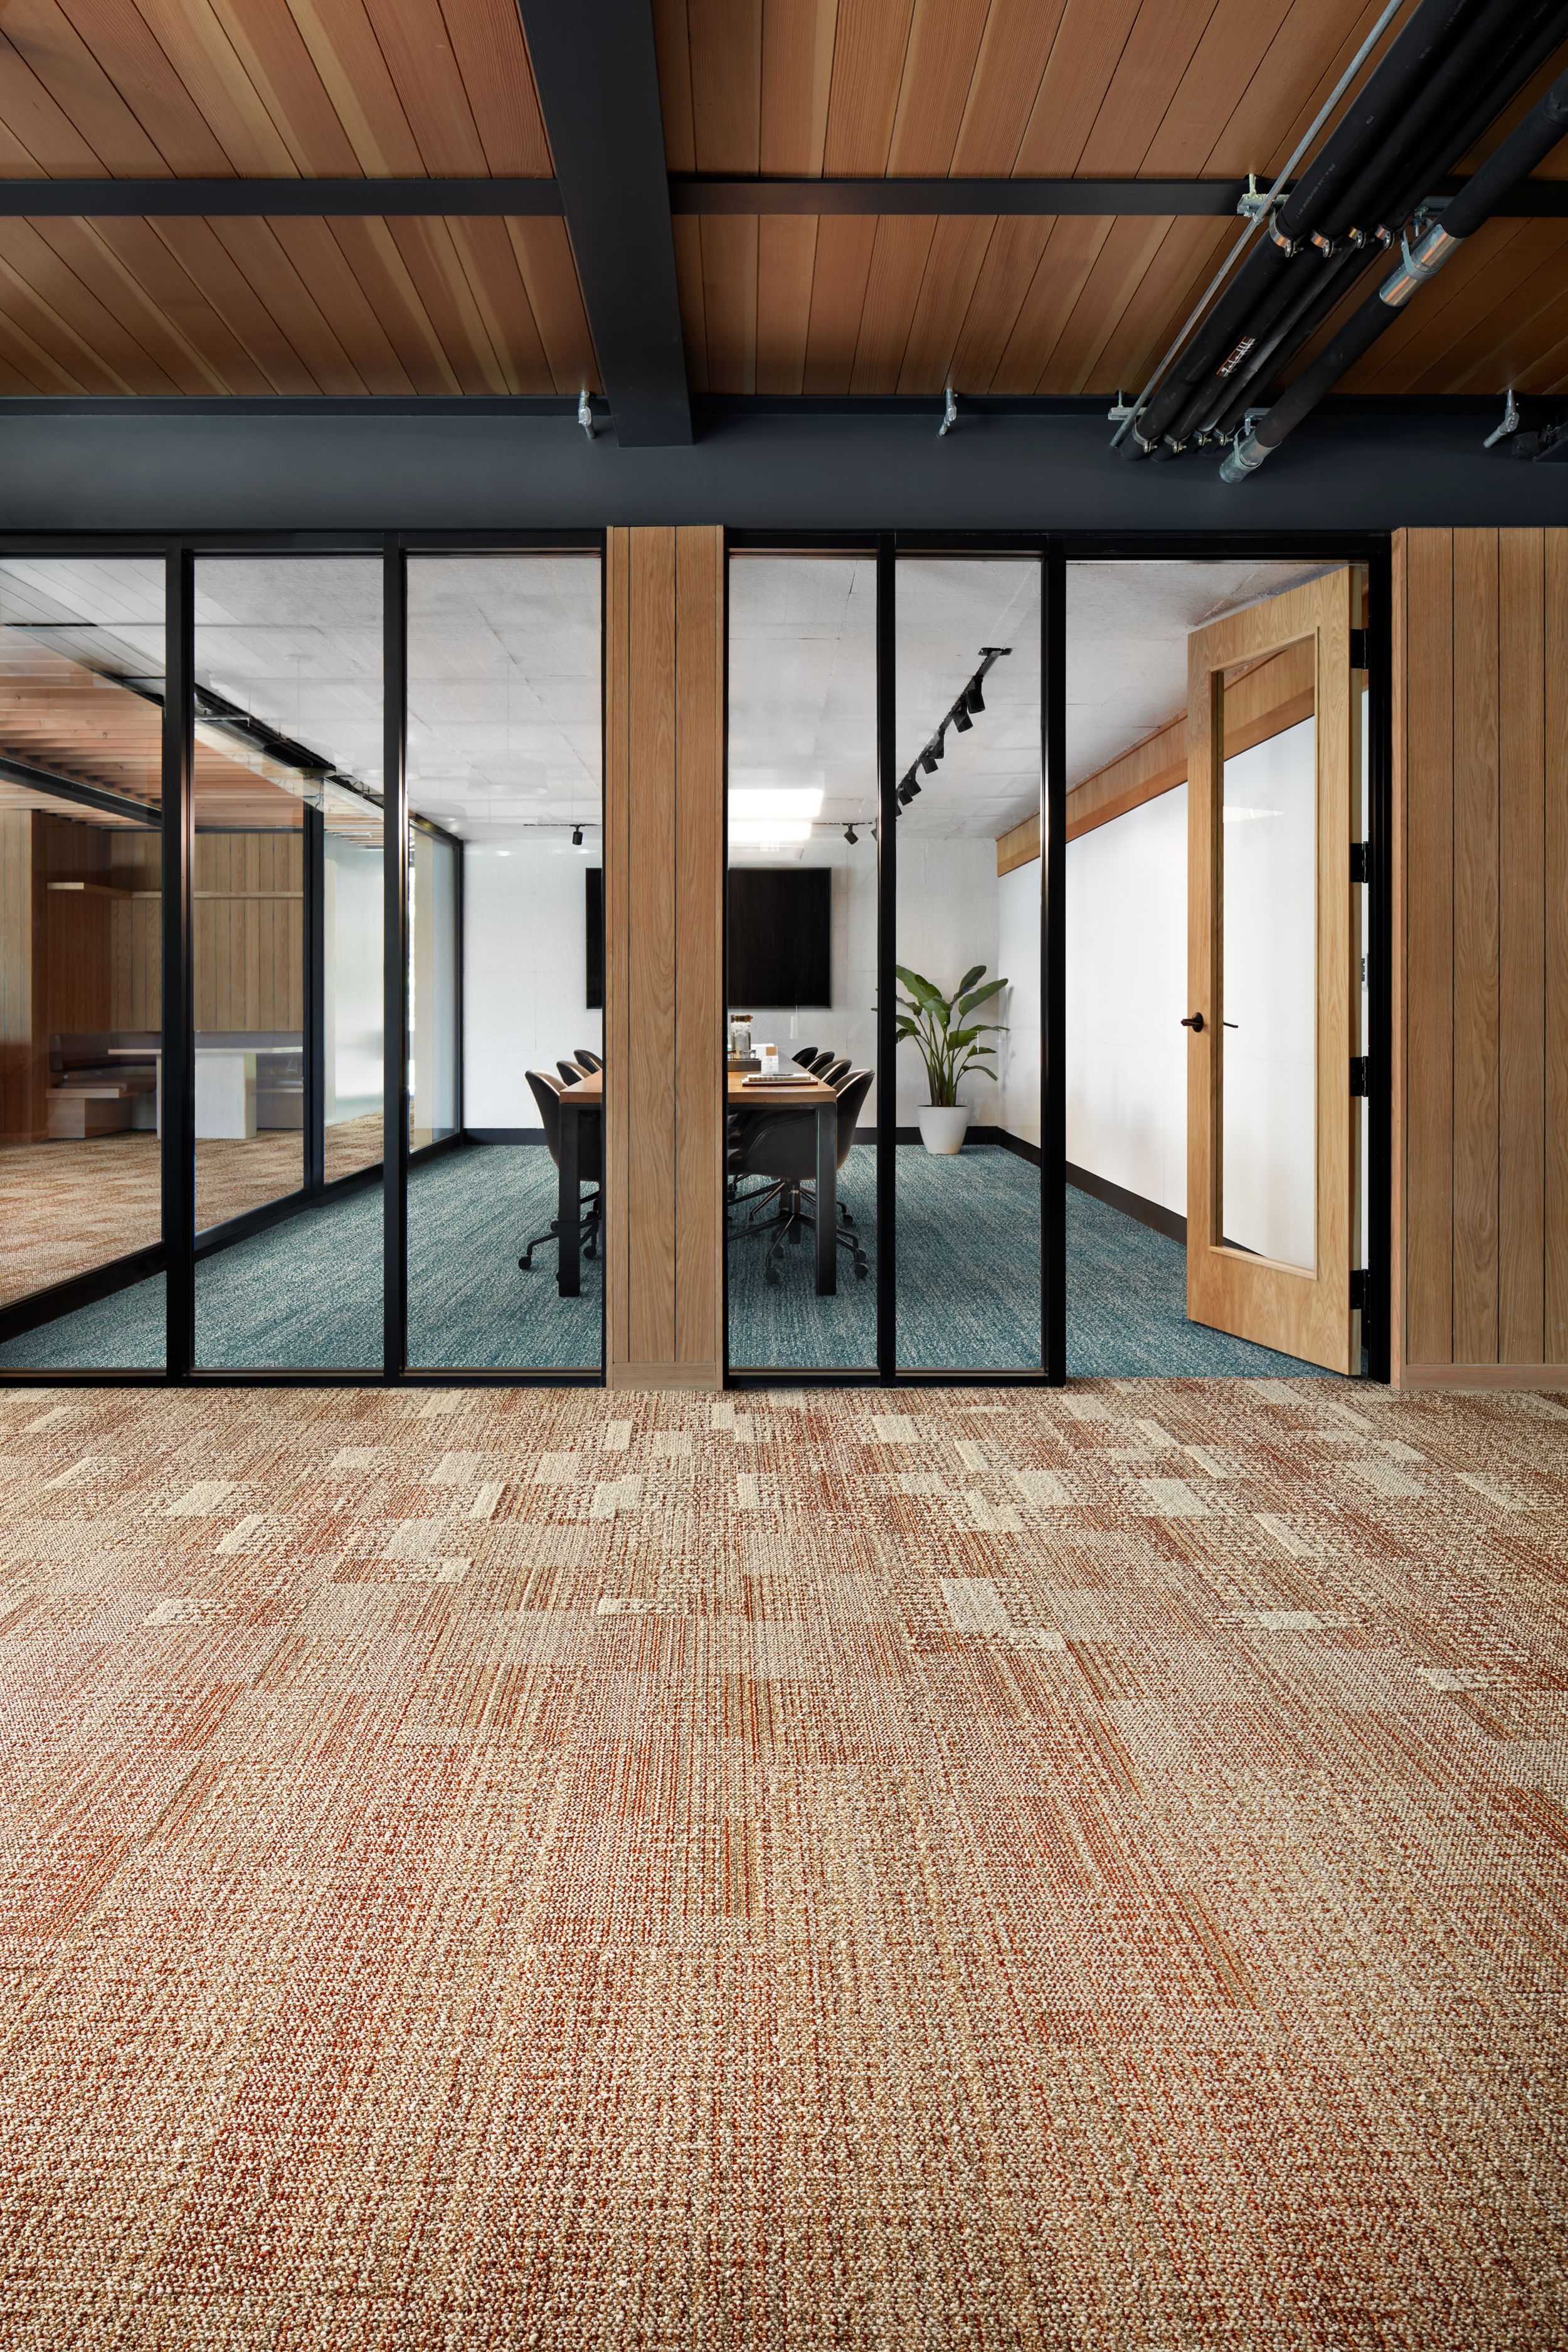 Interface Dot 2 Dot, Dot O-Mine and Diddley Dot plank carpet tile in meeting room imagen número 4